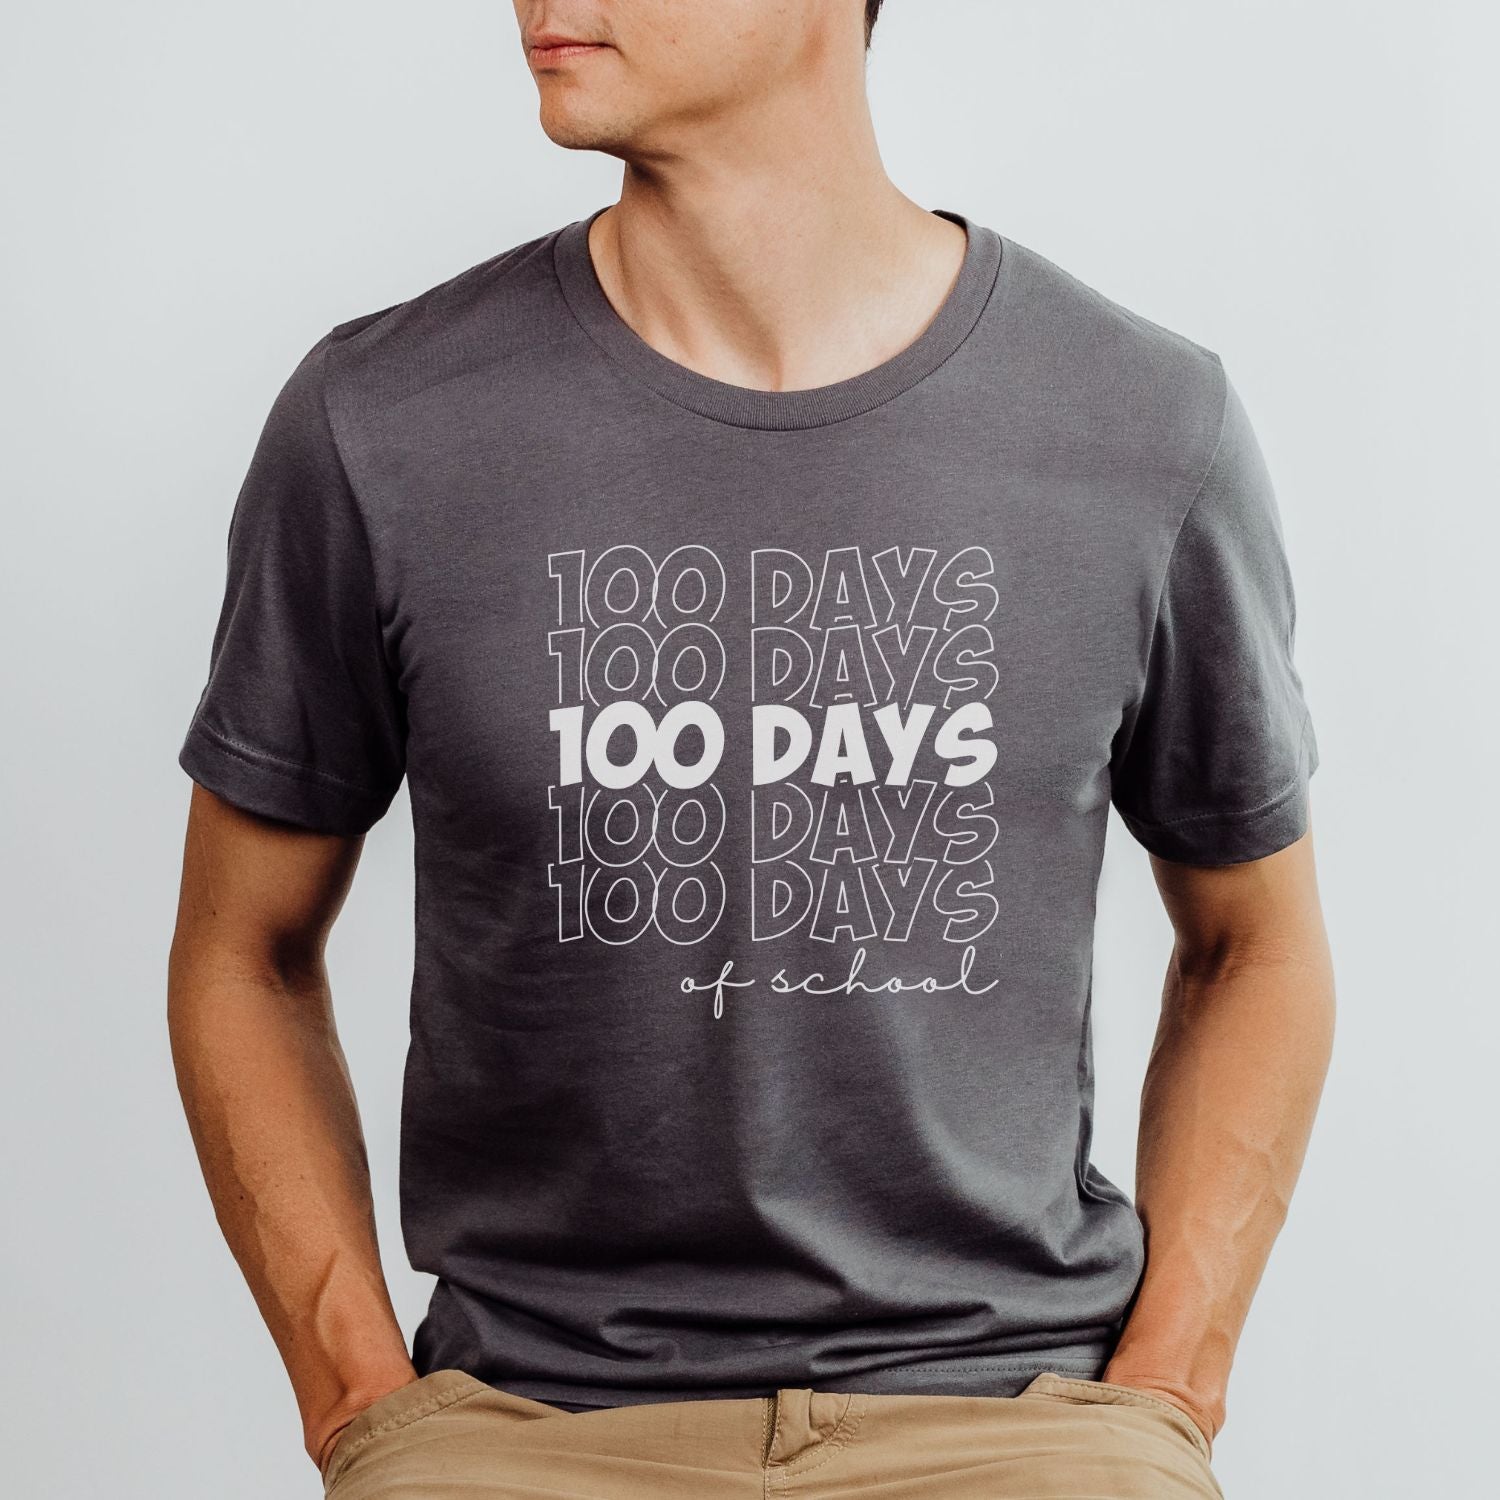 100 Days of School Unisex t-shirt